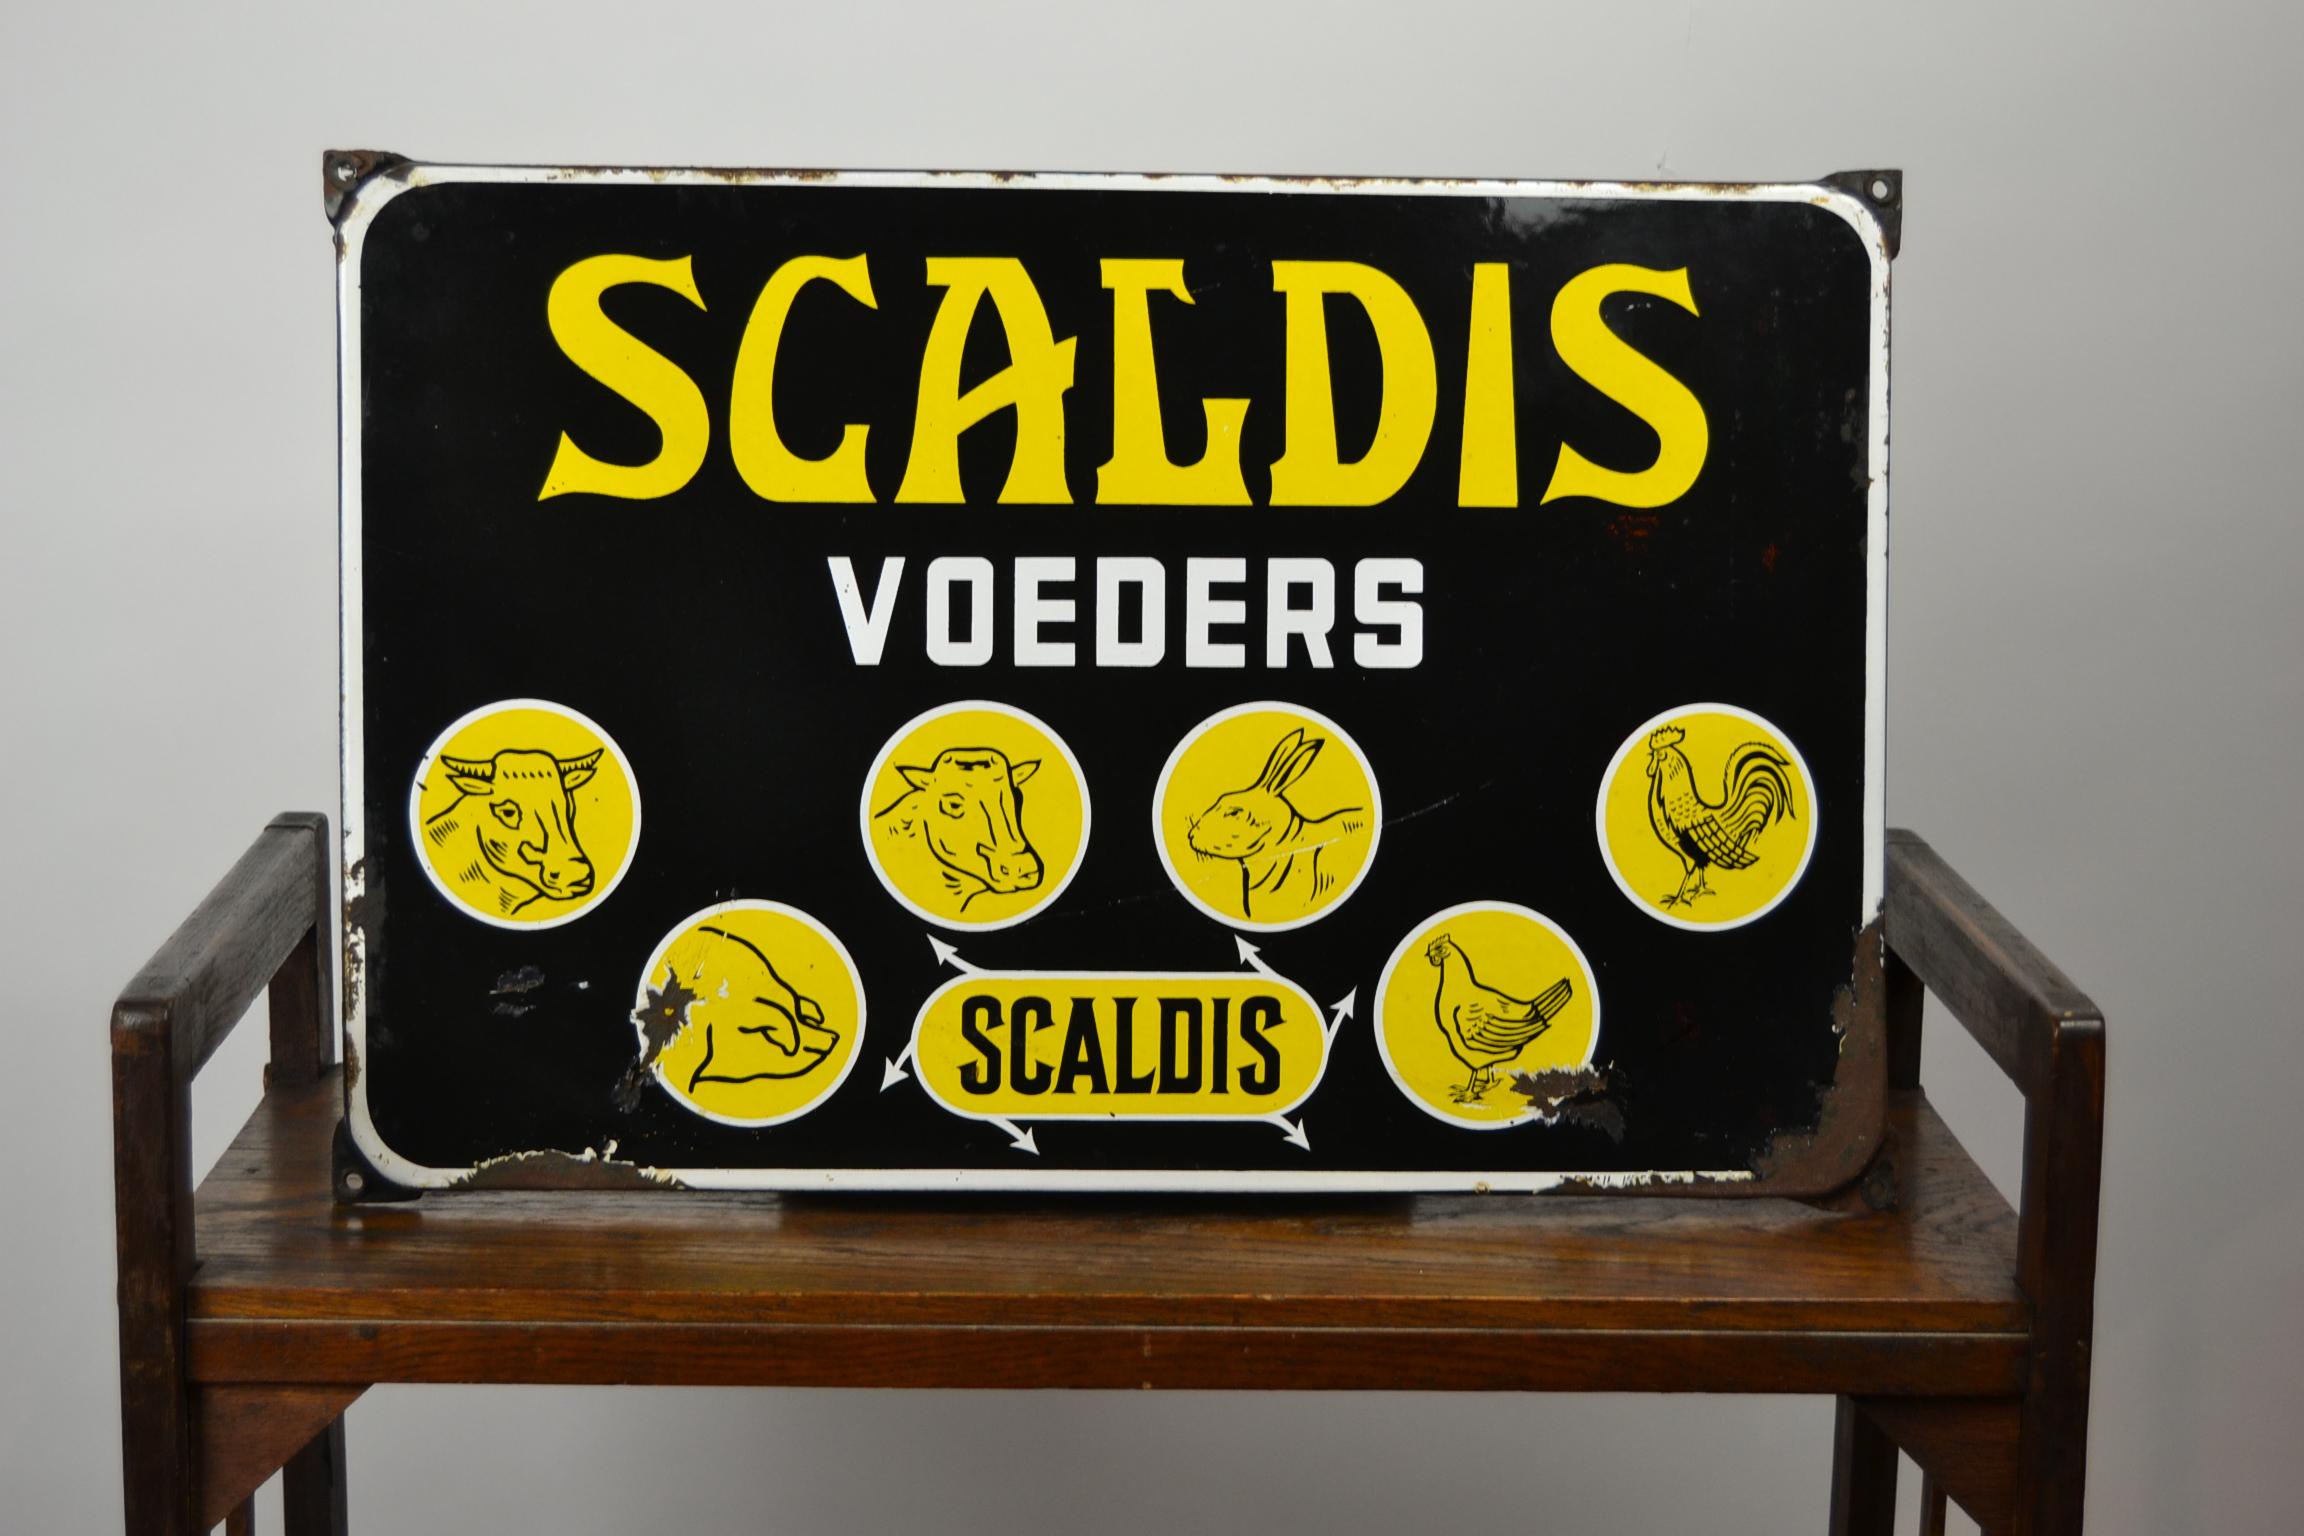 1958 Animal Nutrition Enamel Advertising Sign for Scaldis Belgium (Belgisch)